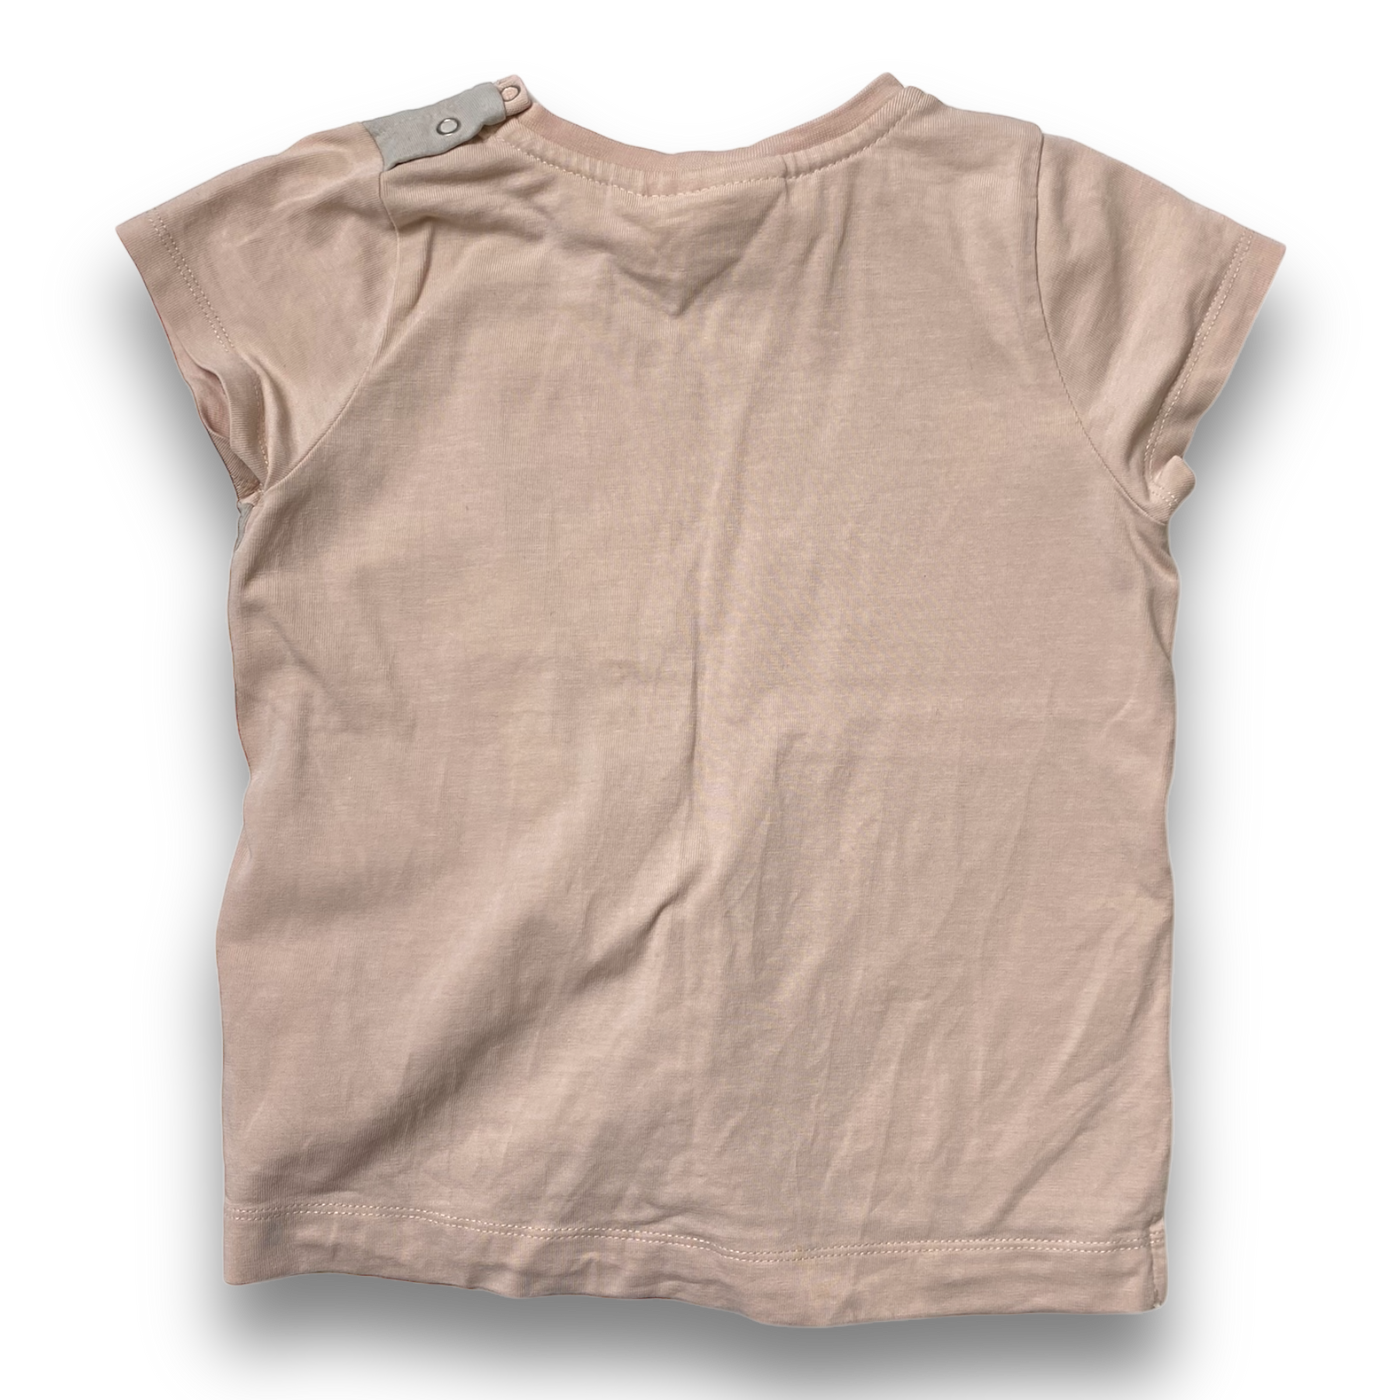 Molo t-shirt, cupcake | 98cm